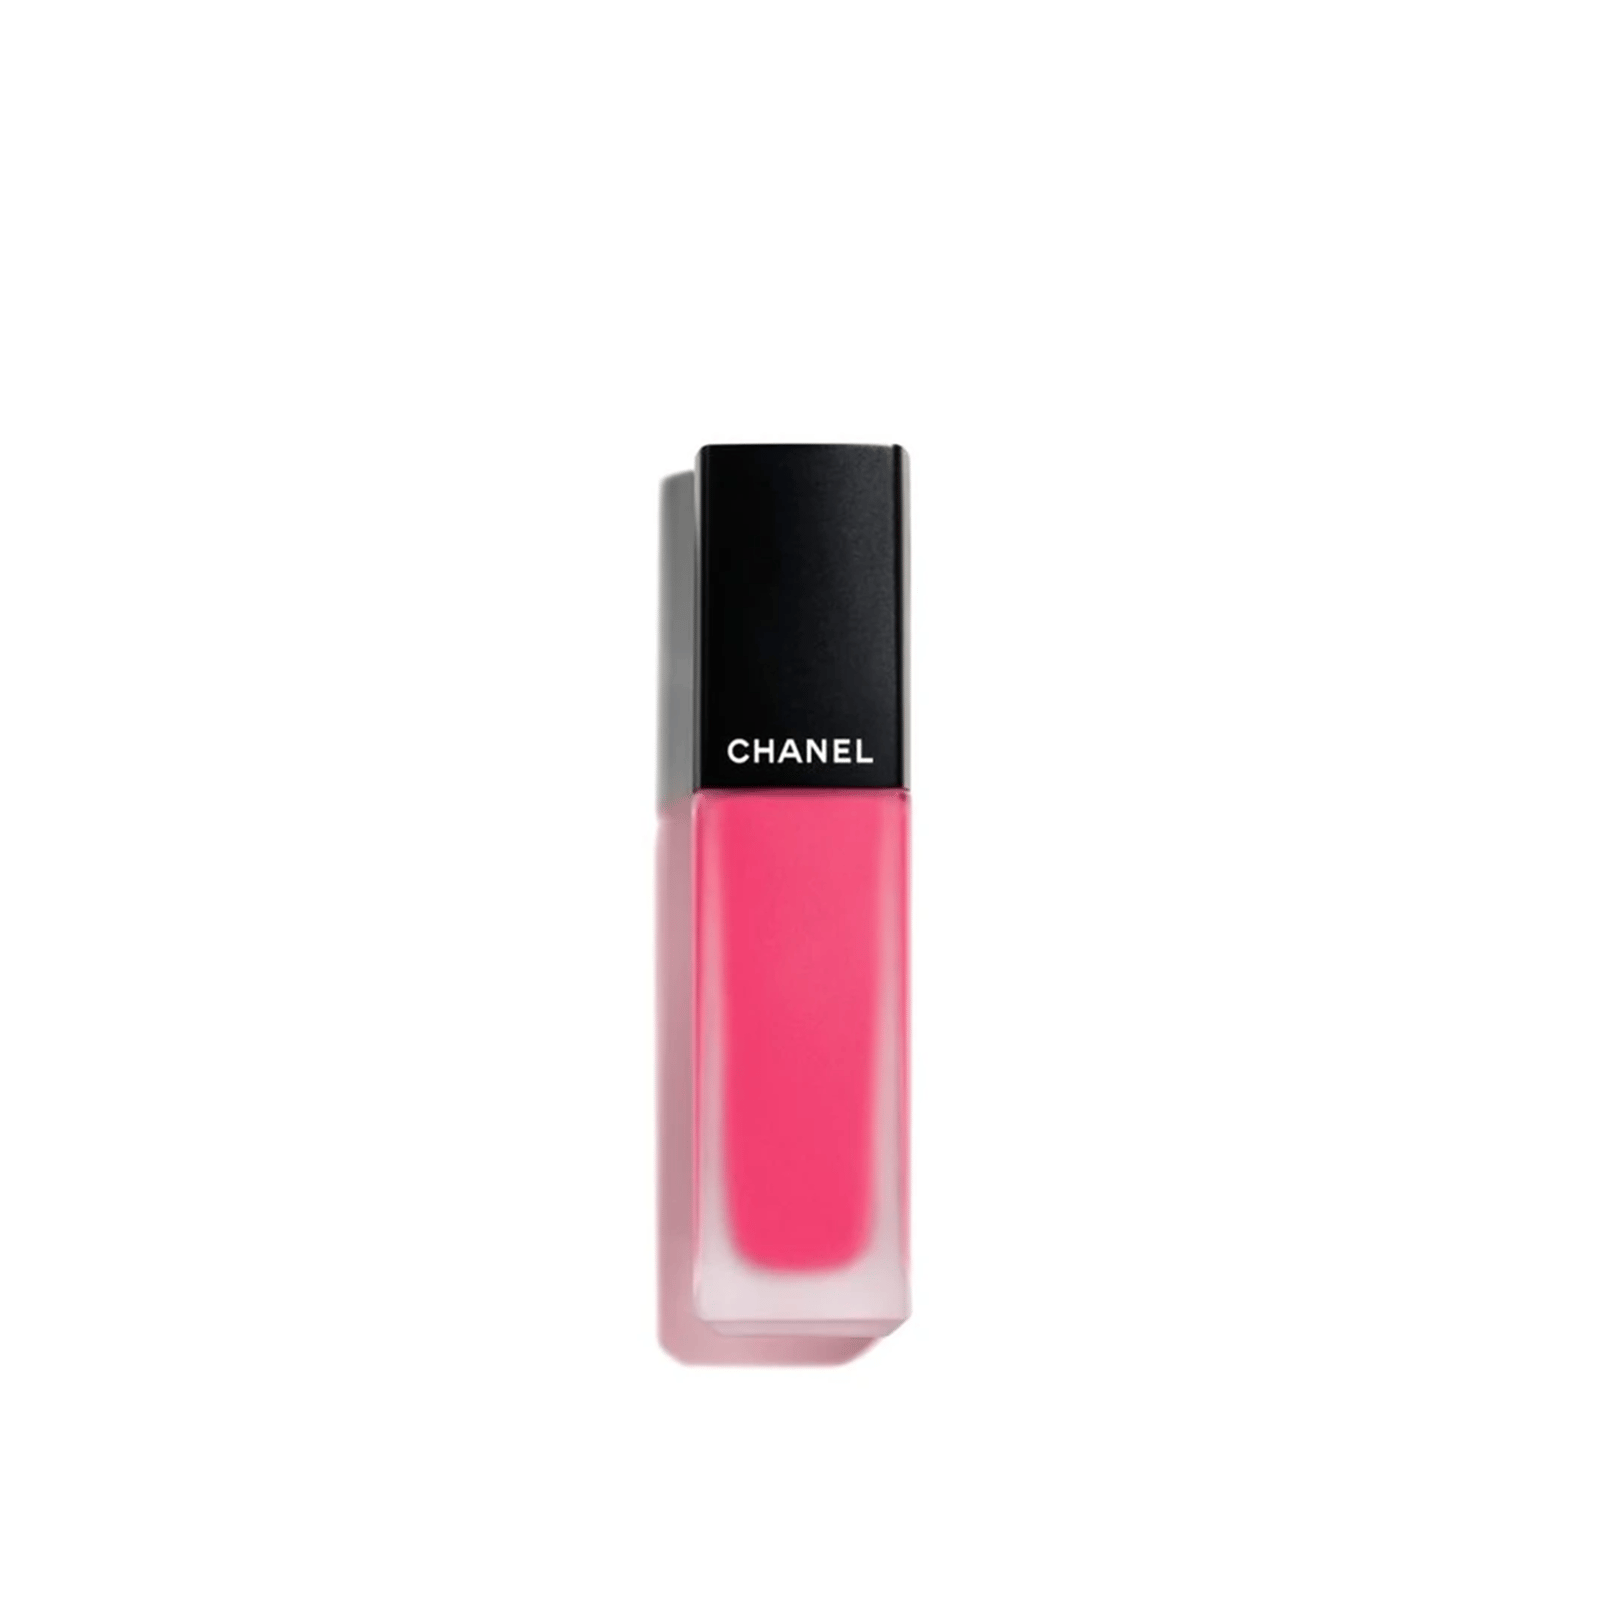 CHANEL Rouge Allure Ink Fusion Intense Matte Liquid Lip Colour 808 Vibrant Pink 6ml